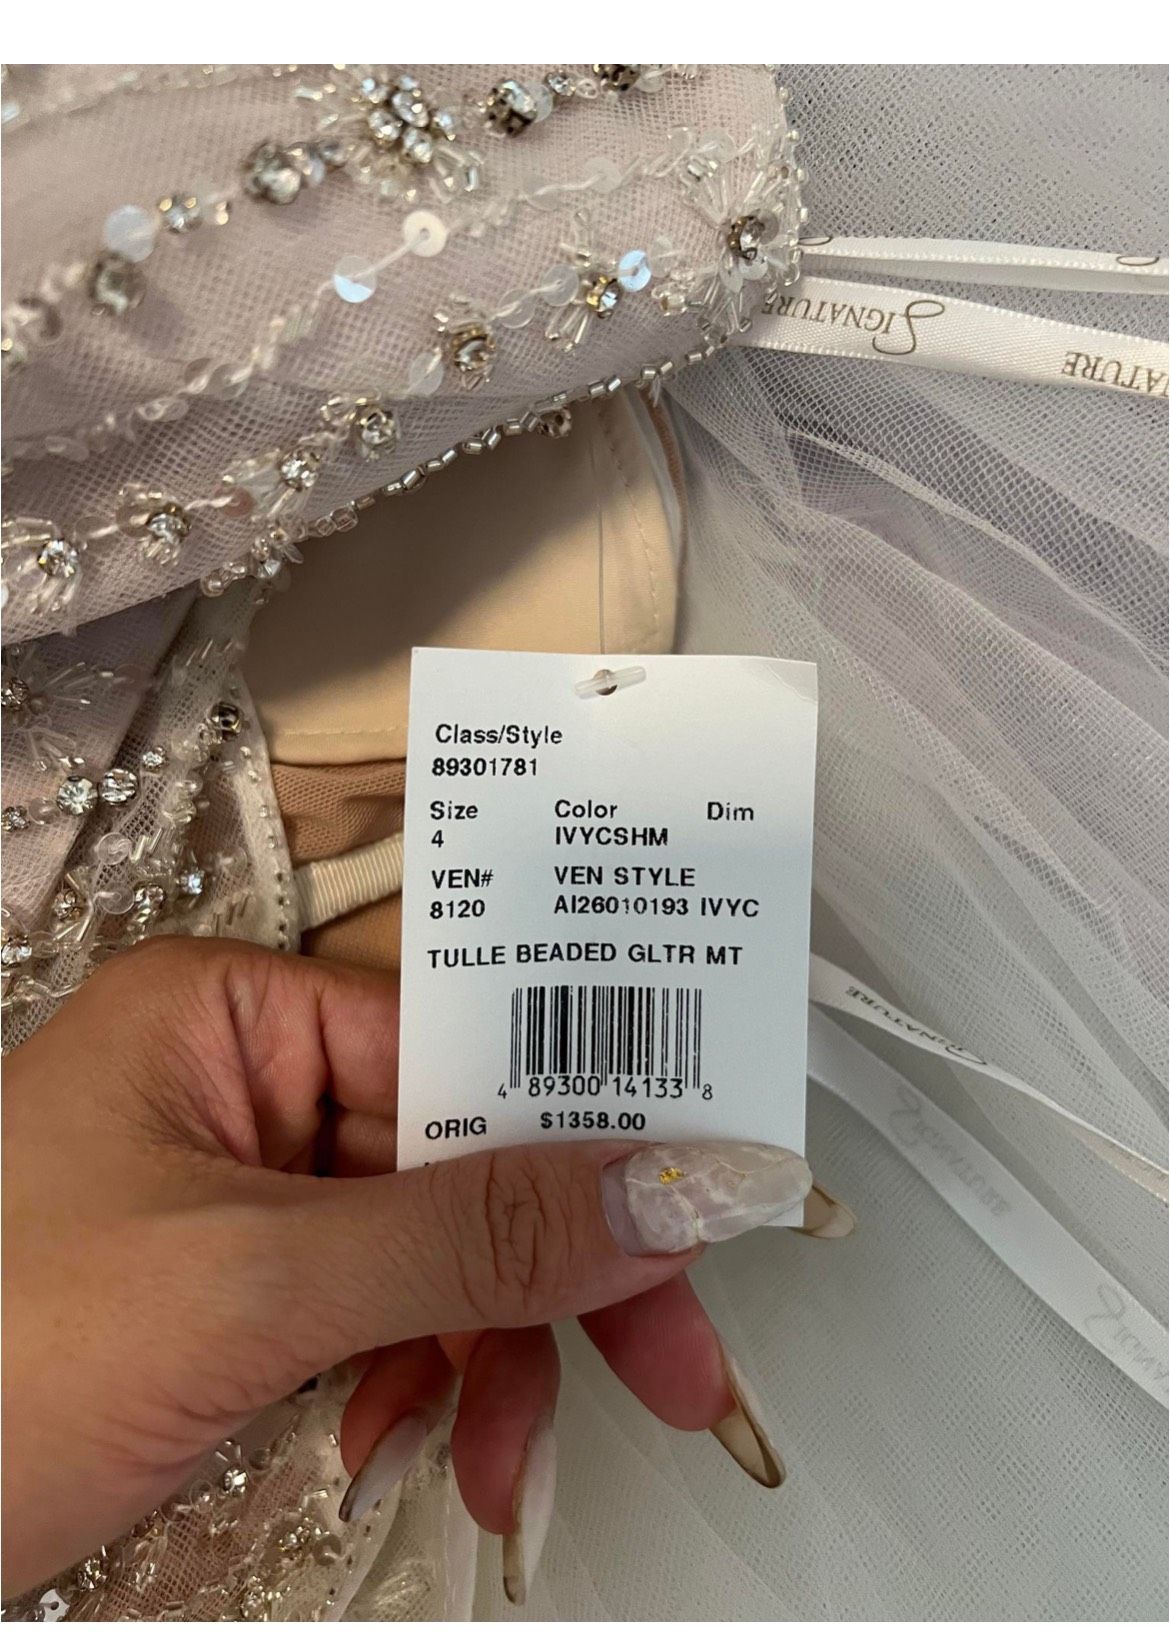 David's Bridal Size 4 Wedding White Mermaid Dress on Queenly